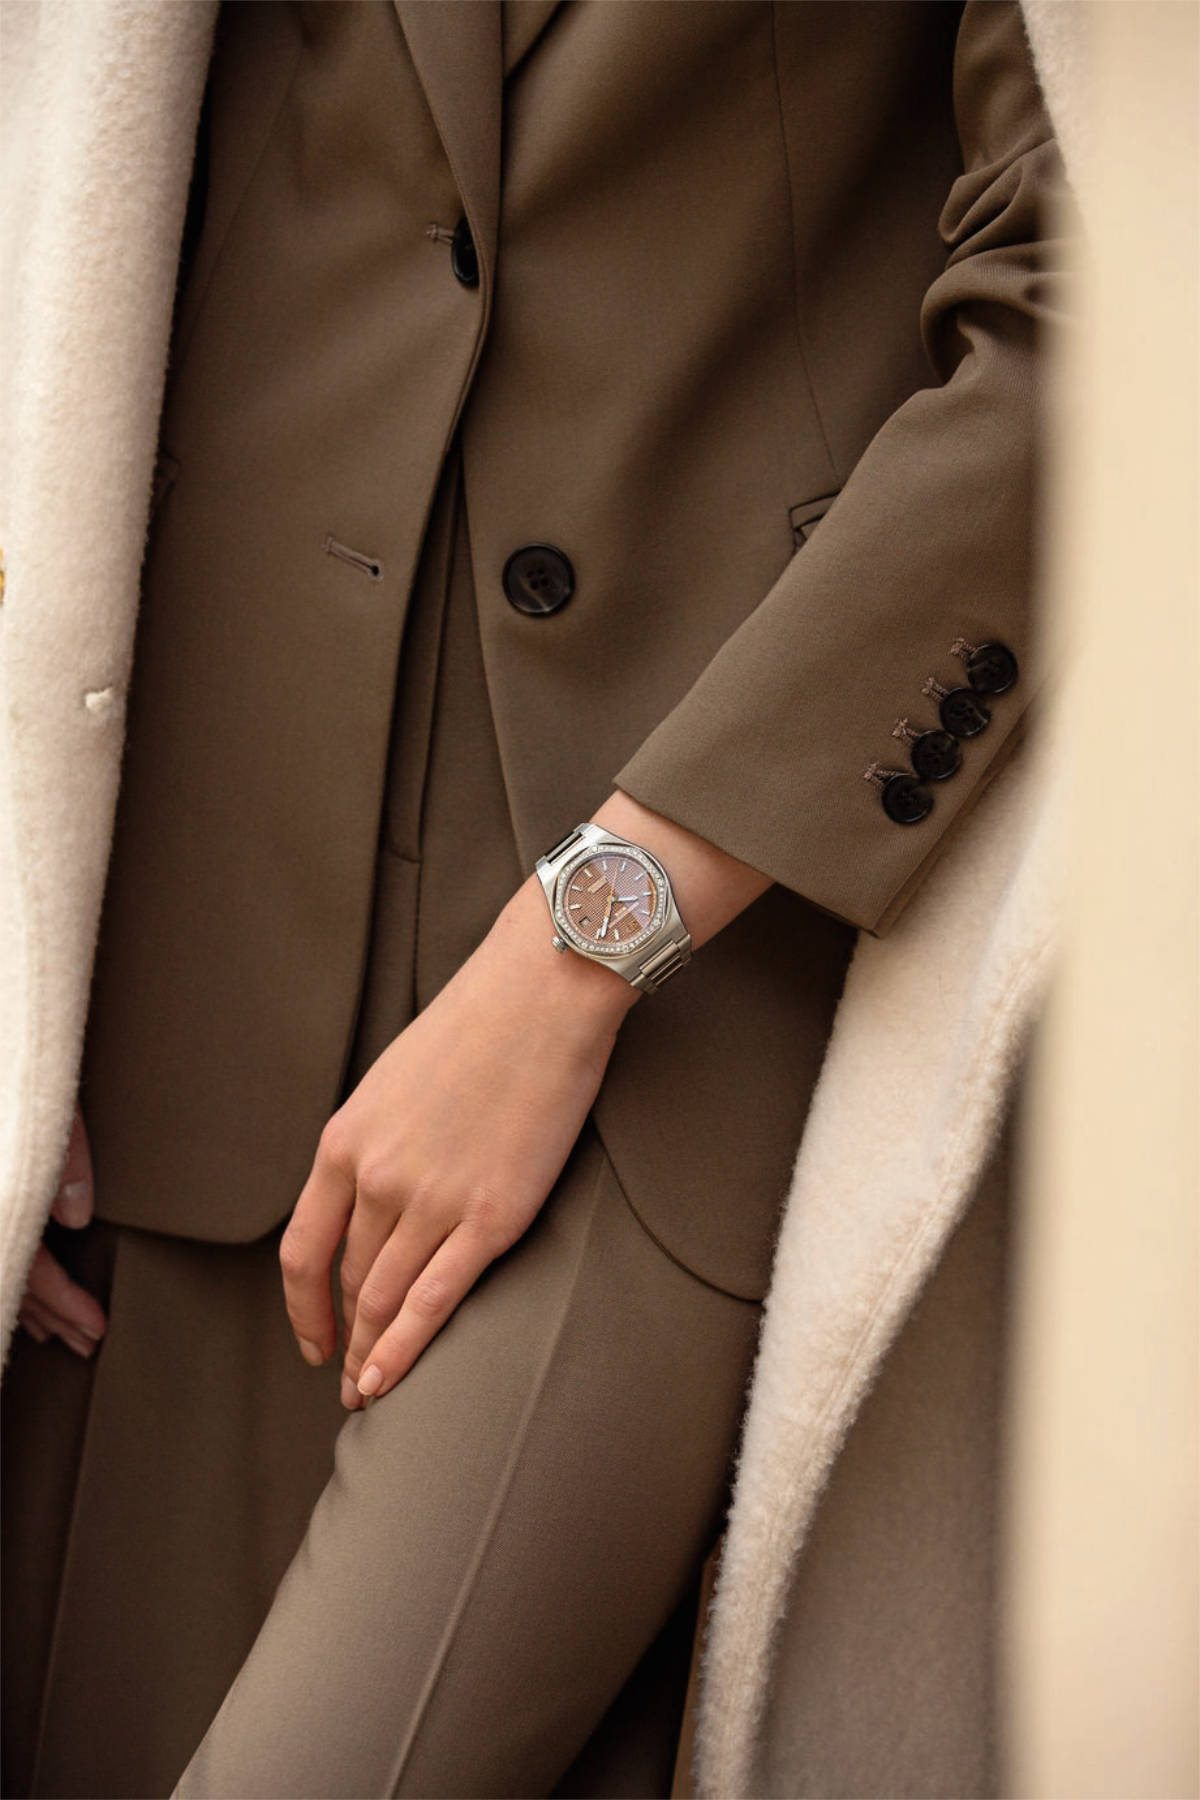 Girard-Perregaux Unveils Its New Laureato 38 MM Copper Diamond Bezel Watch